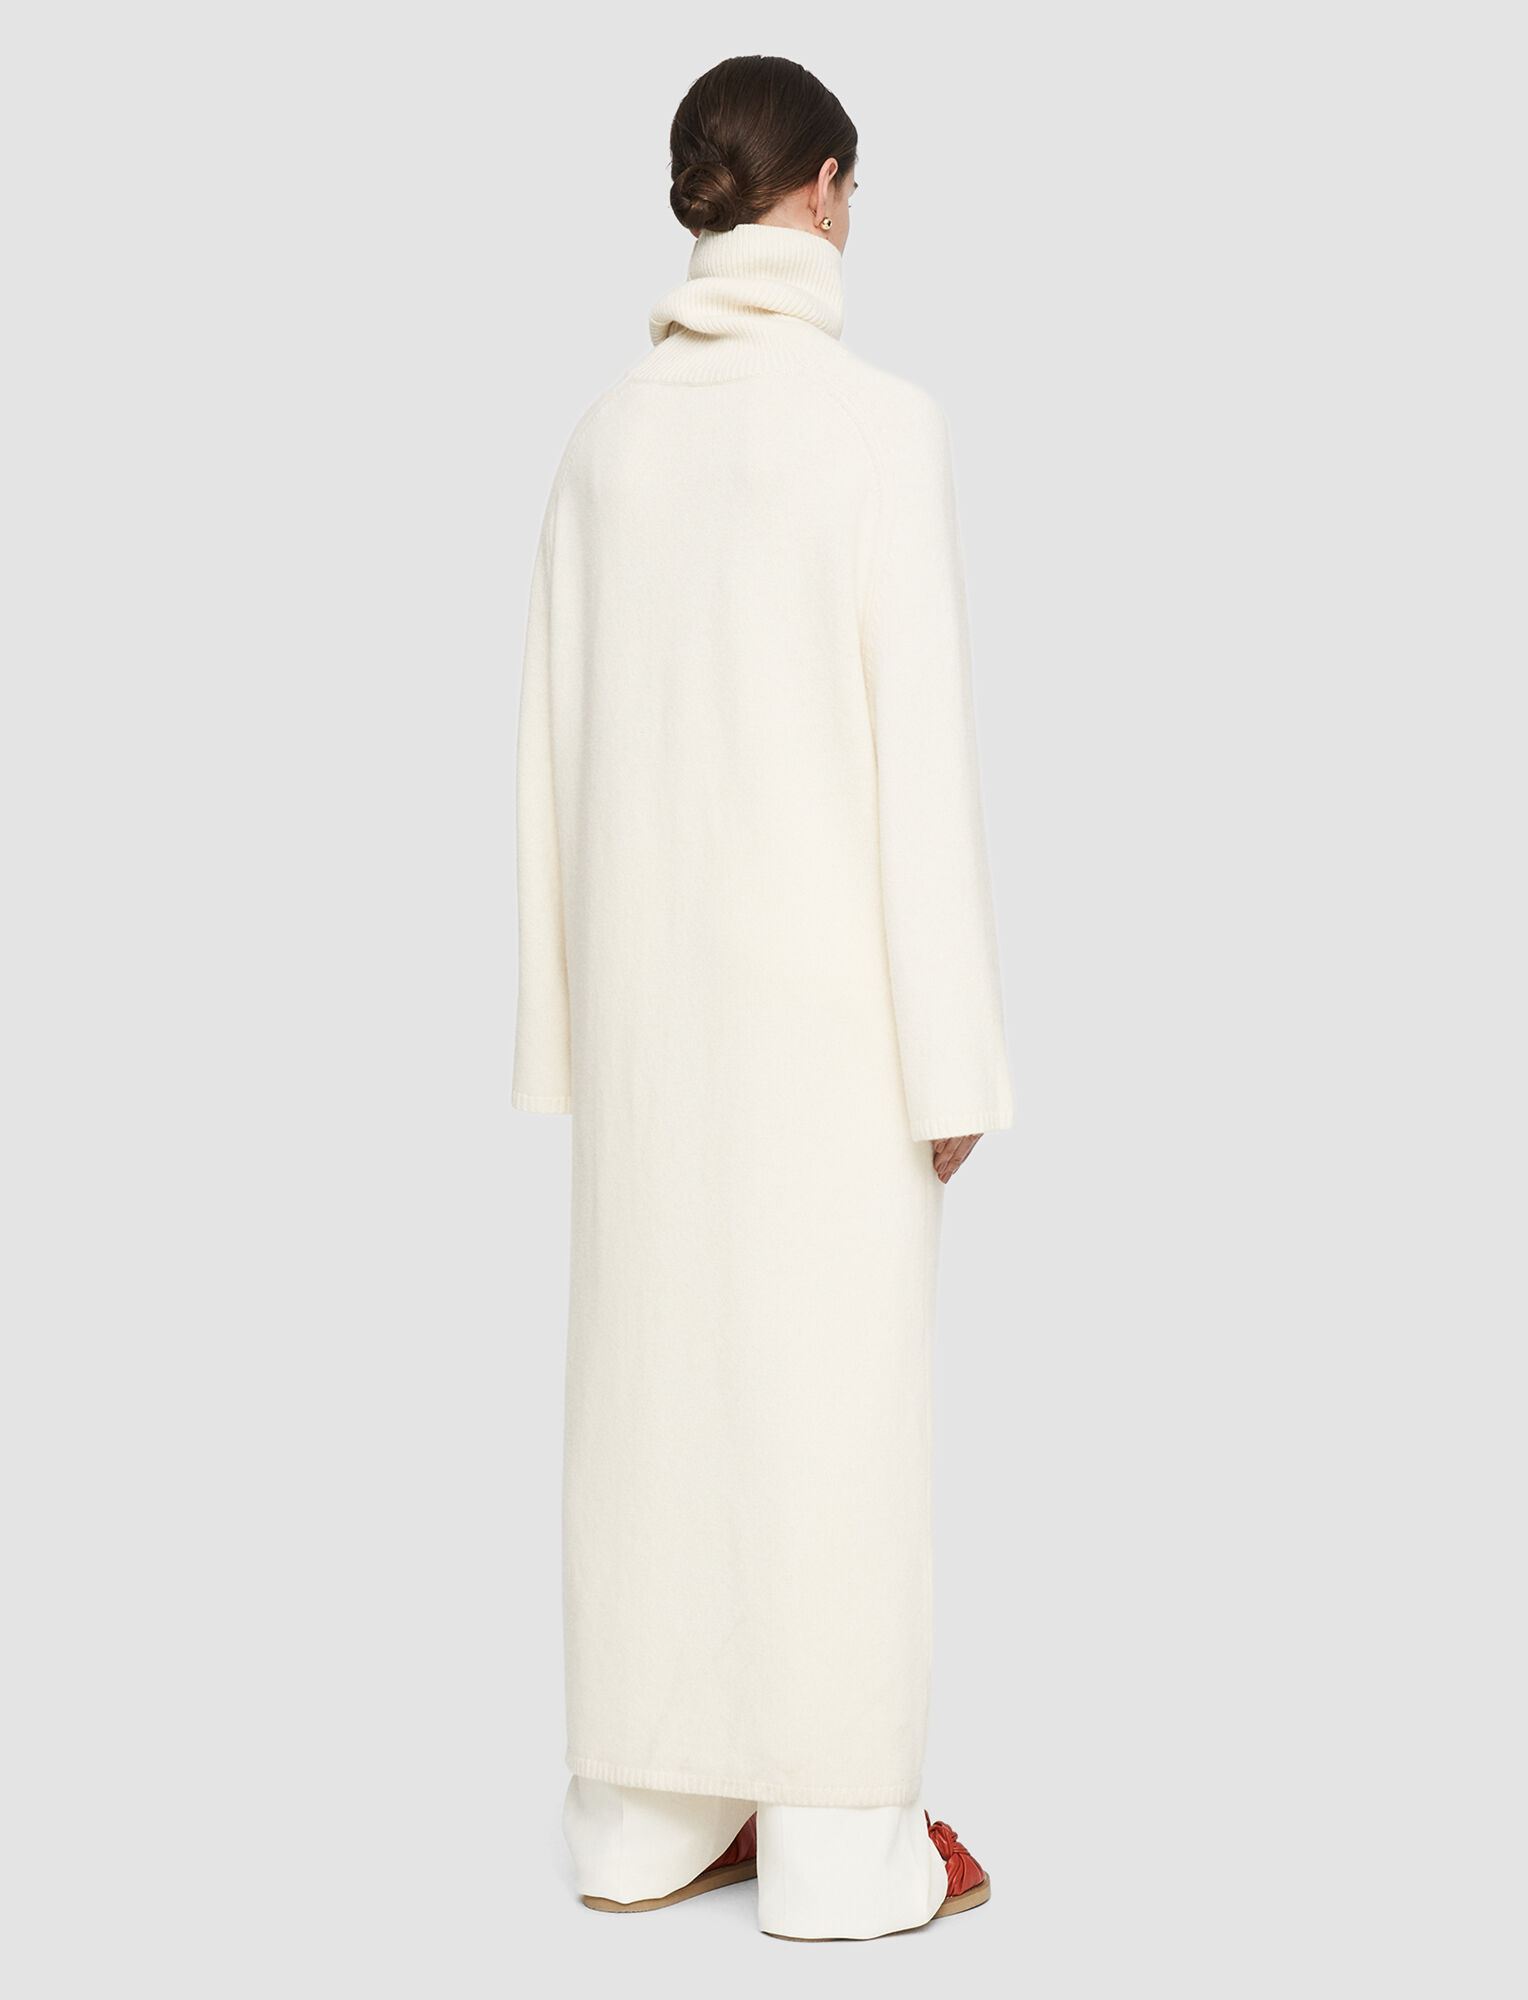 Joseph, Oversize Knit Viviane Dress, in Ivory